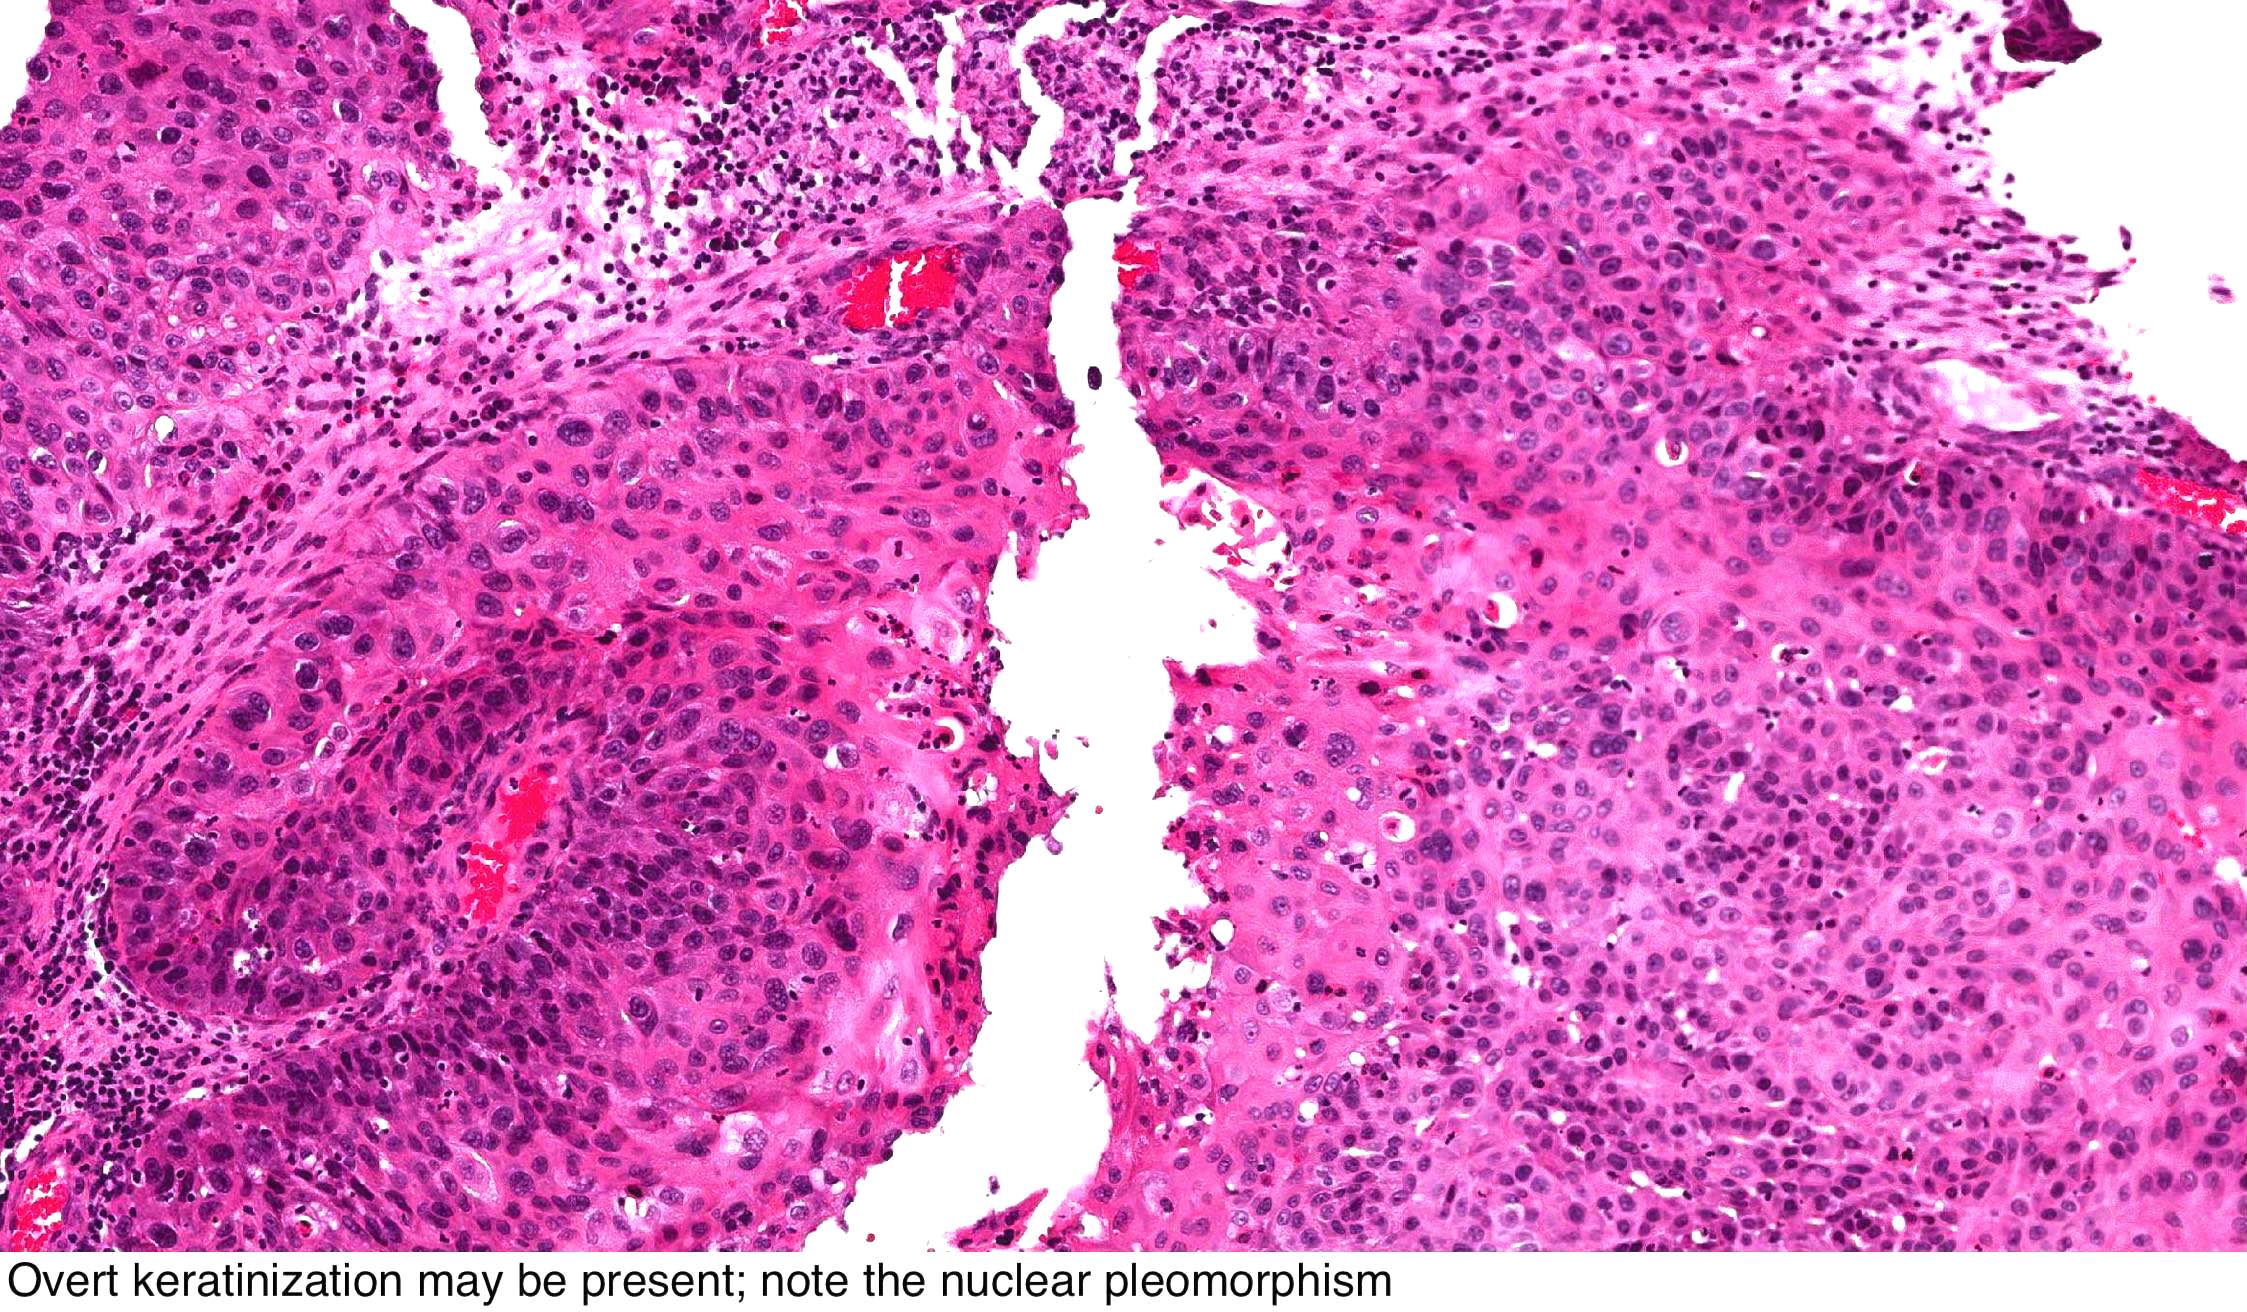 Papiloma nasosinusal histologia - Canceres Uroteliales tratamentul simptomelor viermilor copiilor